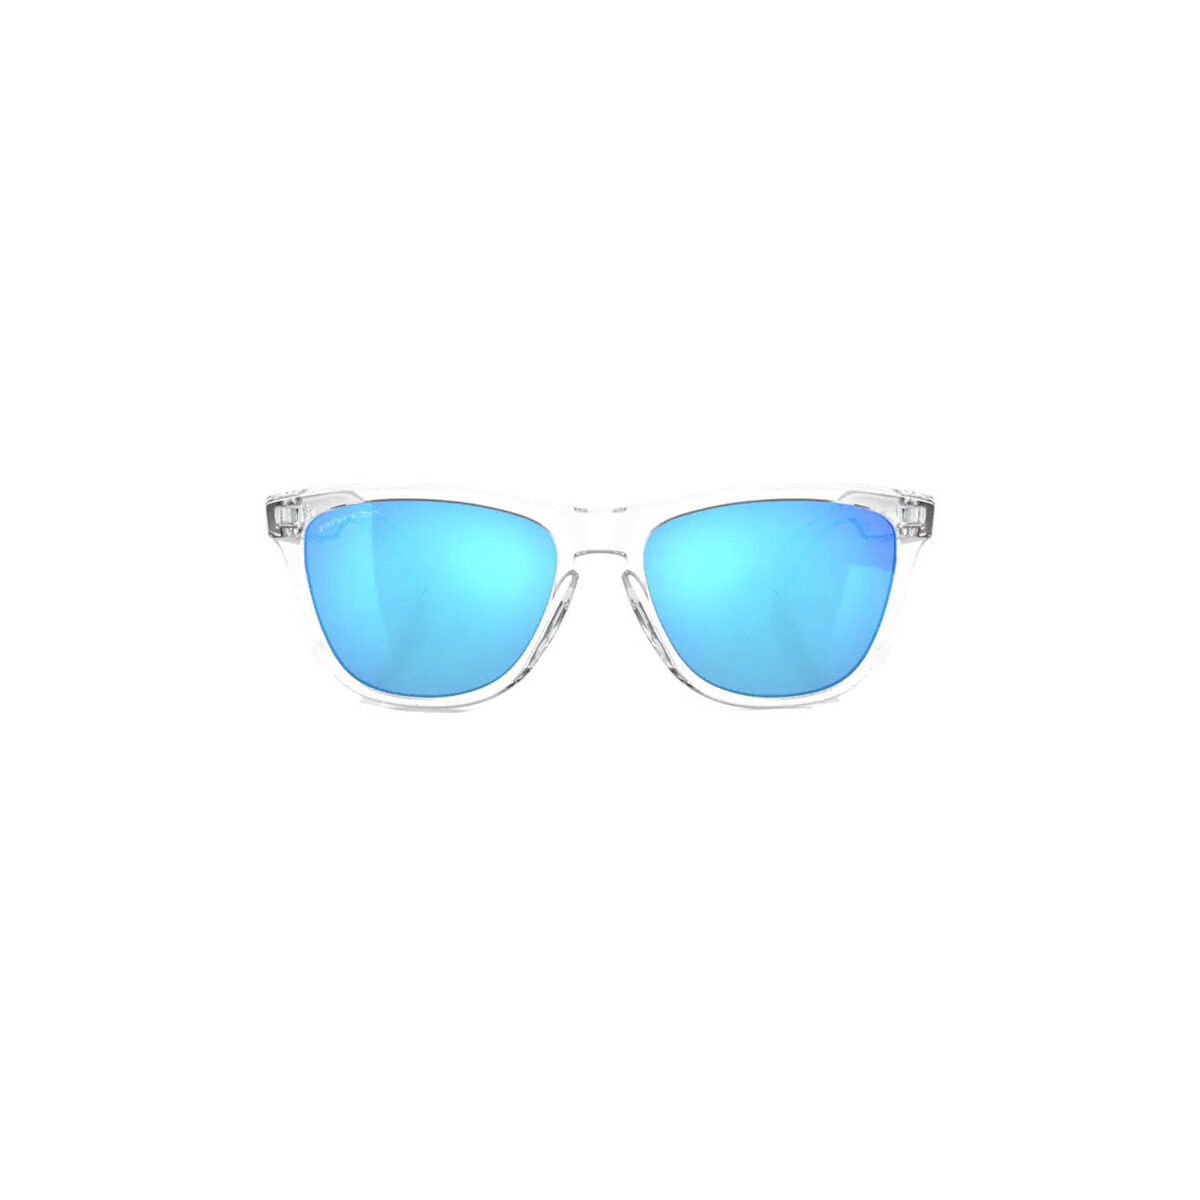 Orologi & Gioielli Occhiali da sole Oakley OO9013 FROGSKINS Occhiali da sole, Trasparente/Blu, 55 mm Altri